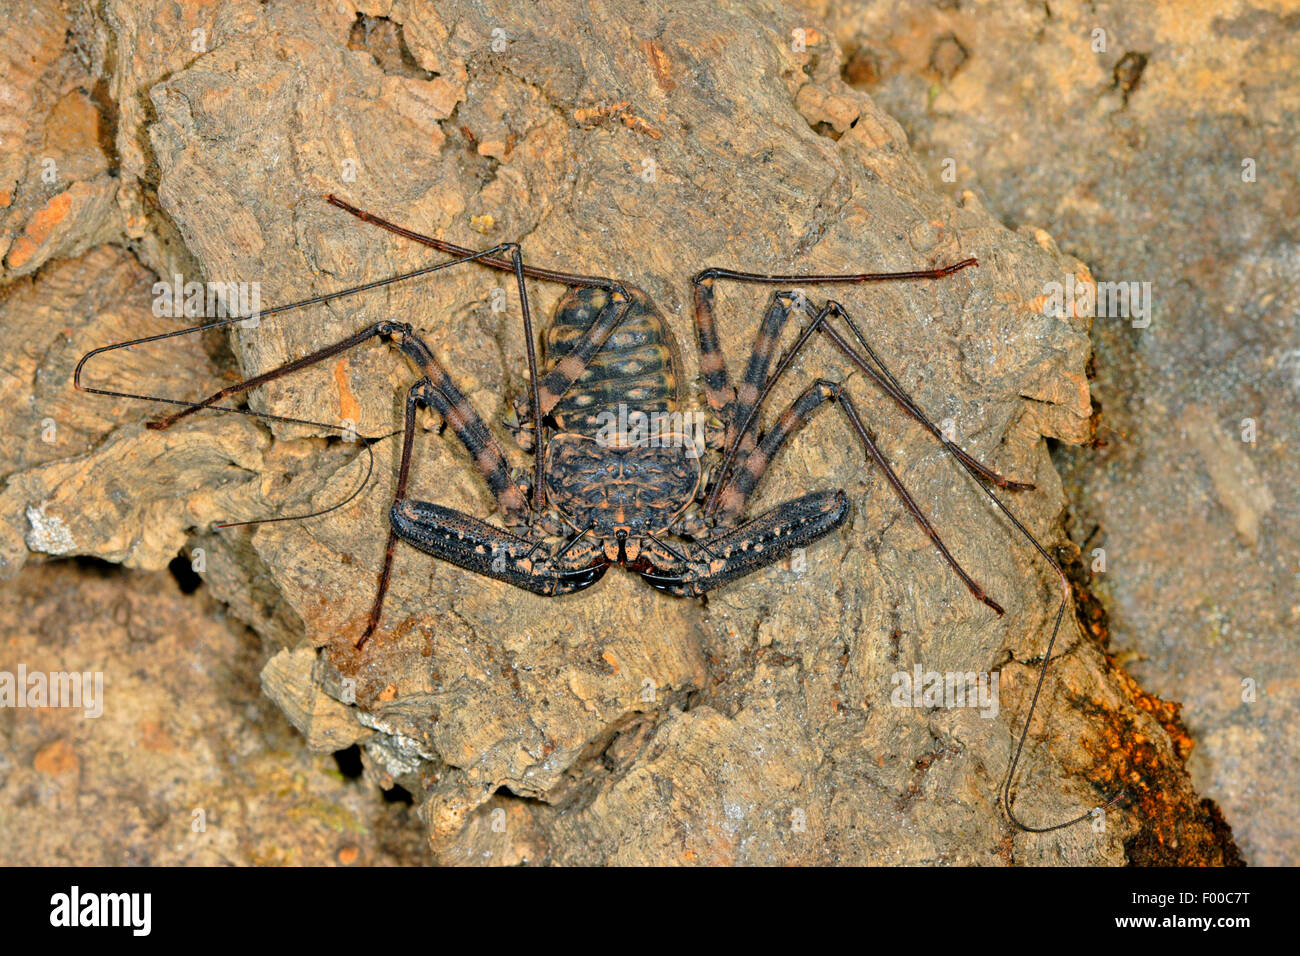 Whip spider, Whipscorpion, Tanzanian Giant Tailless Whipscorpion, Whip scorpion (Damon variegatus), on bark Stock Photo